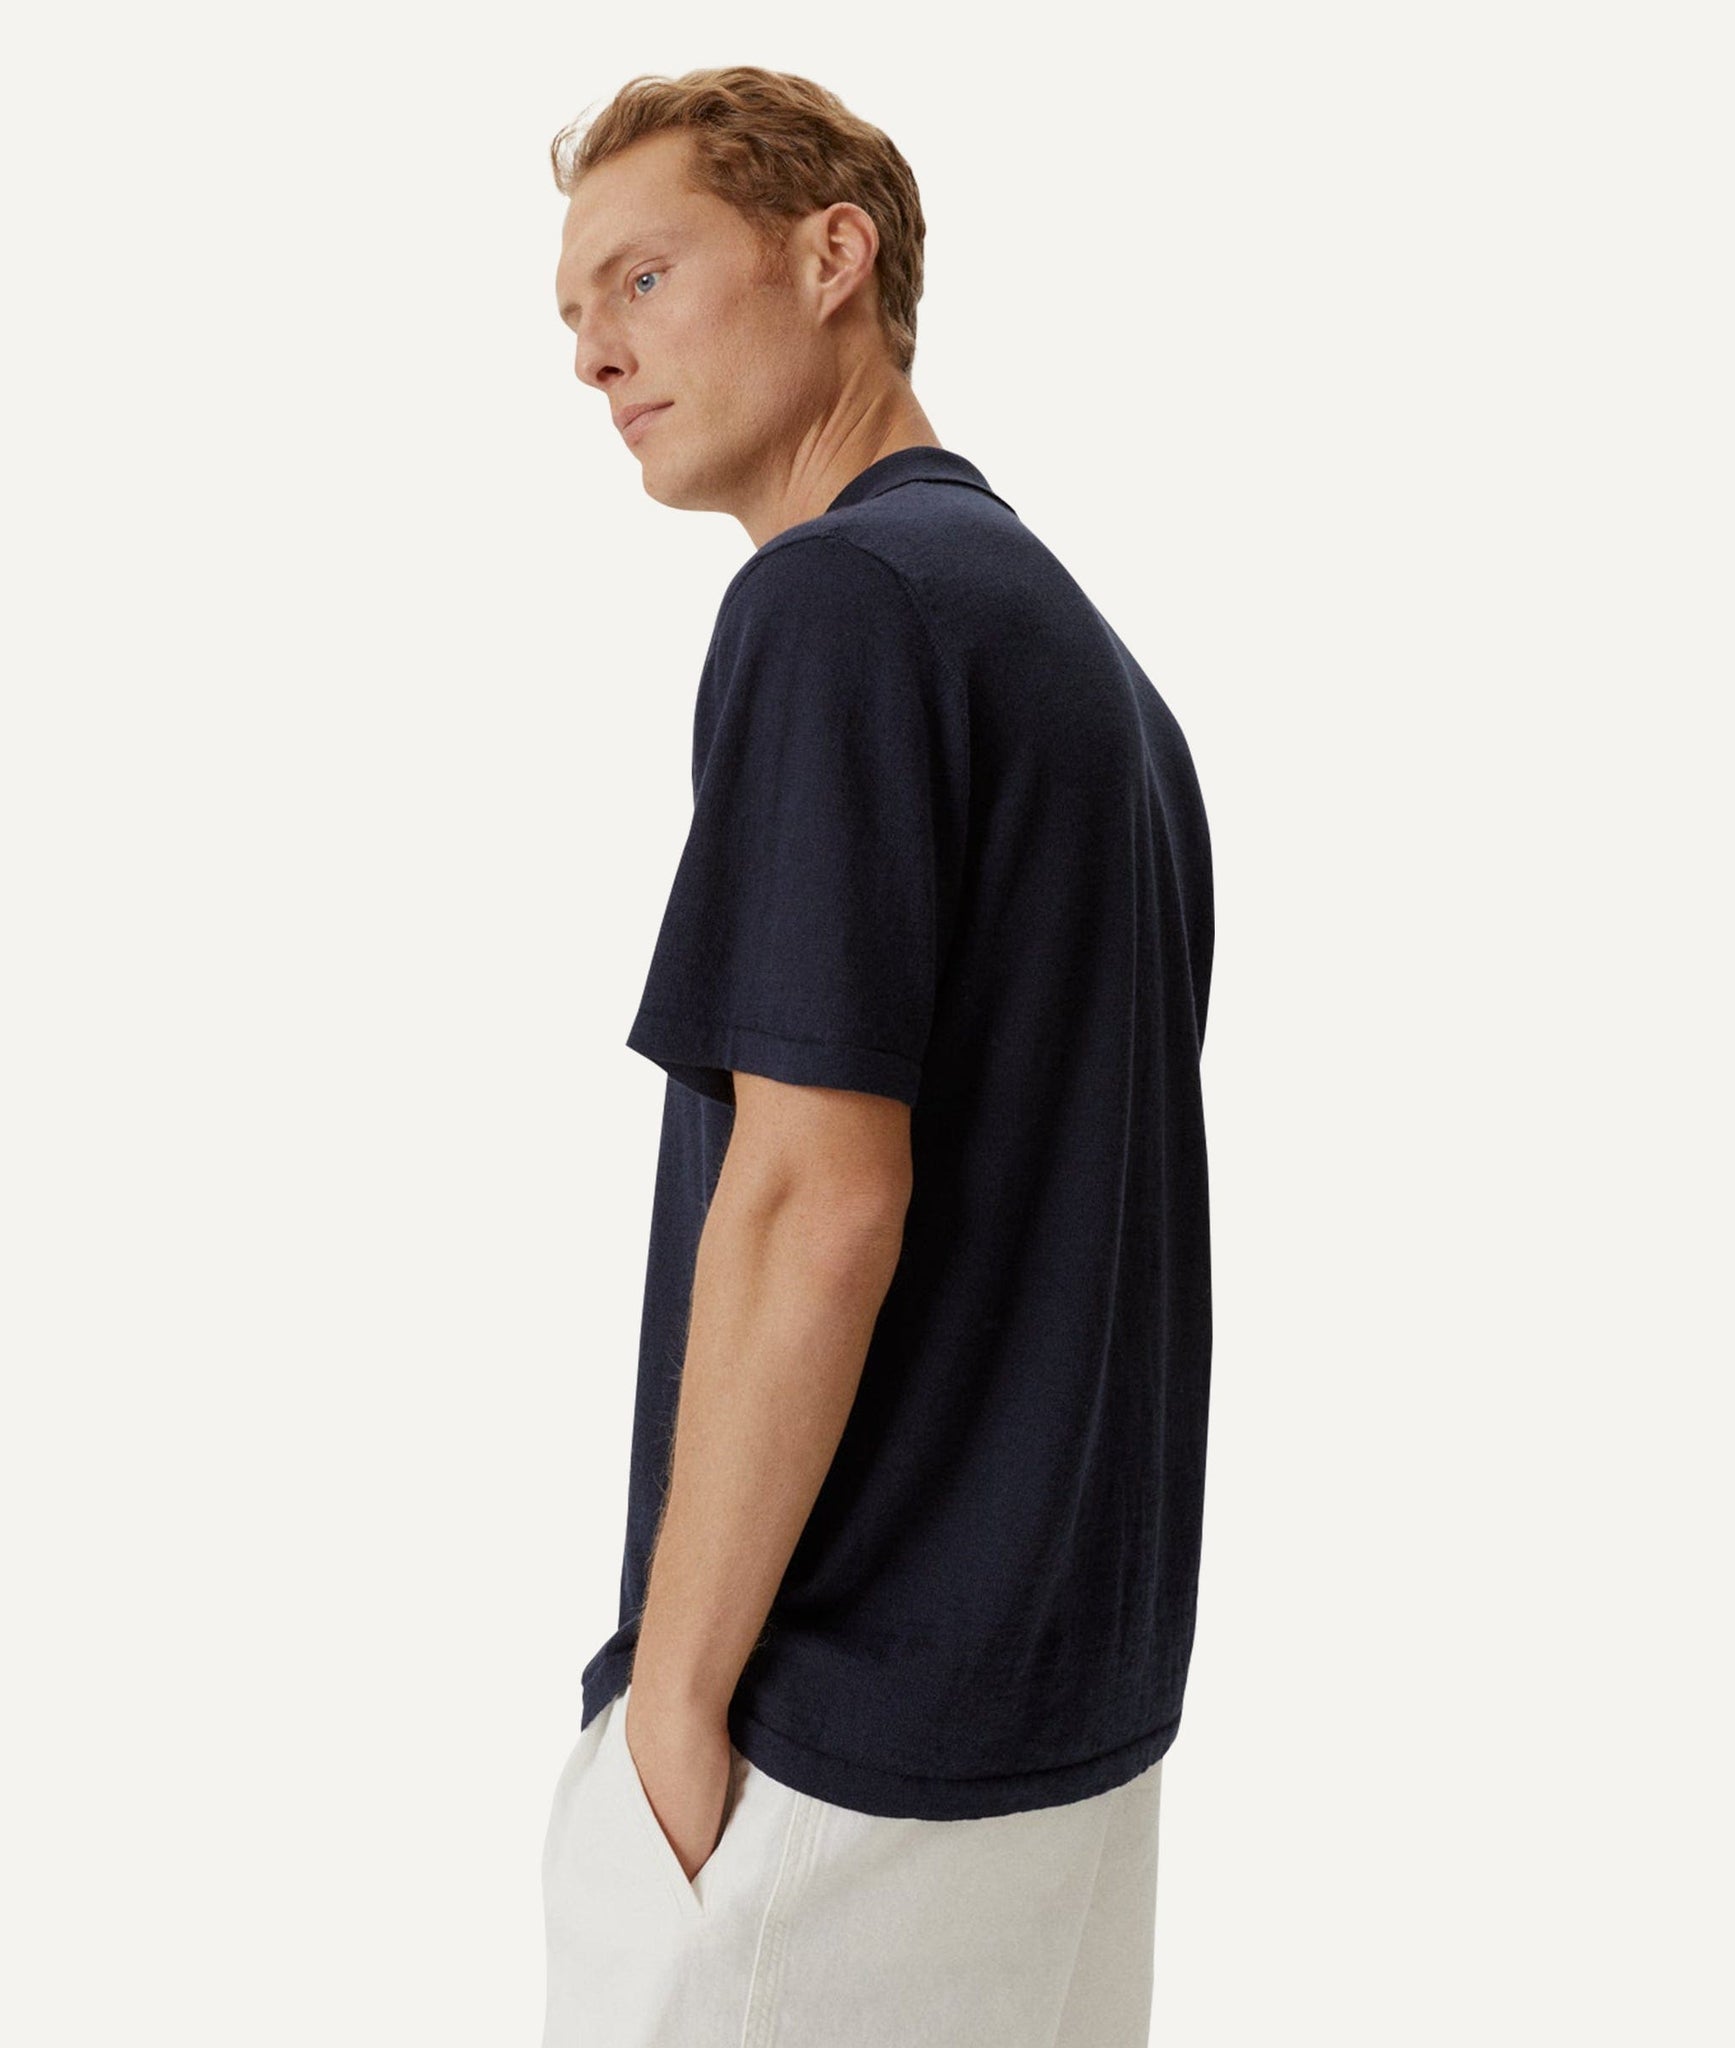 Das Leinen-Baumwoll-Shirt mit kurzen Ärmeln